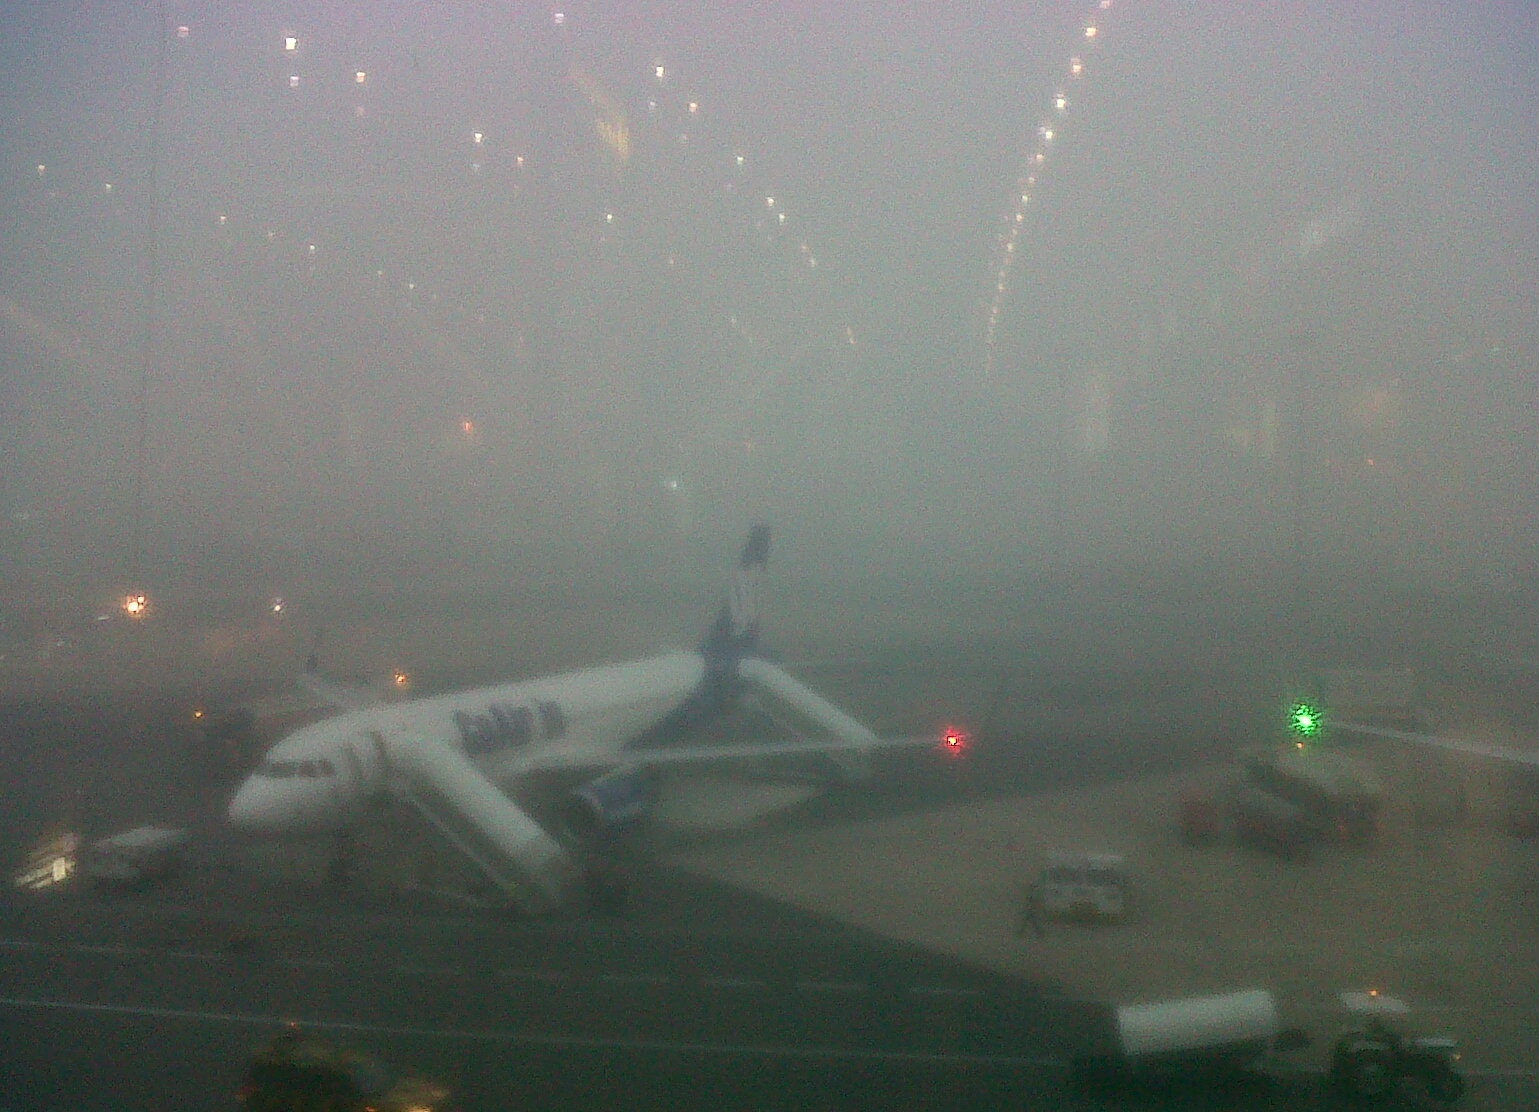 Long delays at Delhi airport as smog hampers visibility